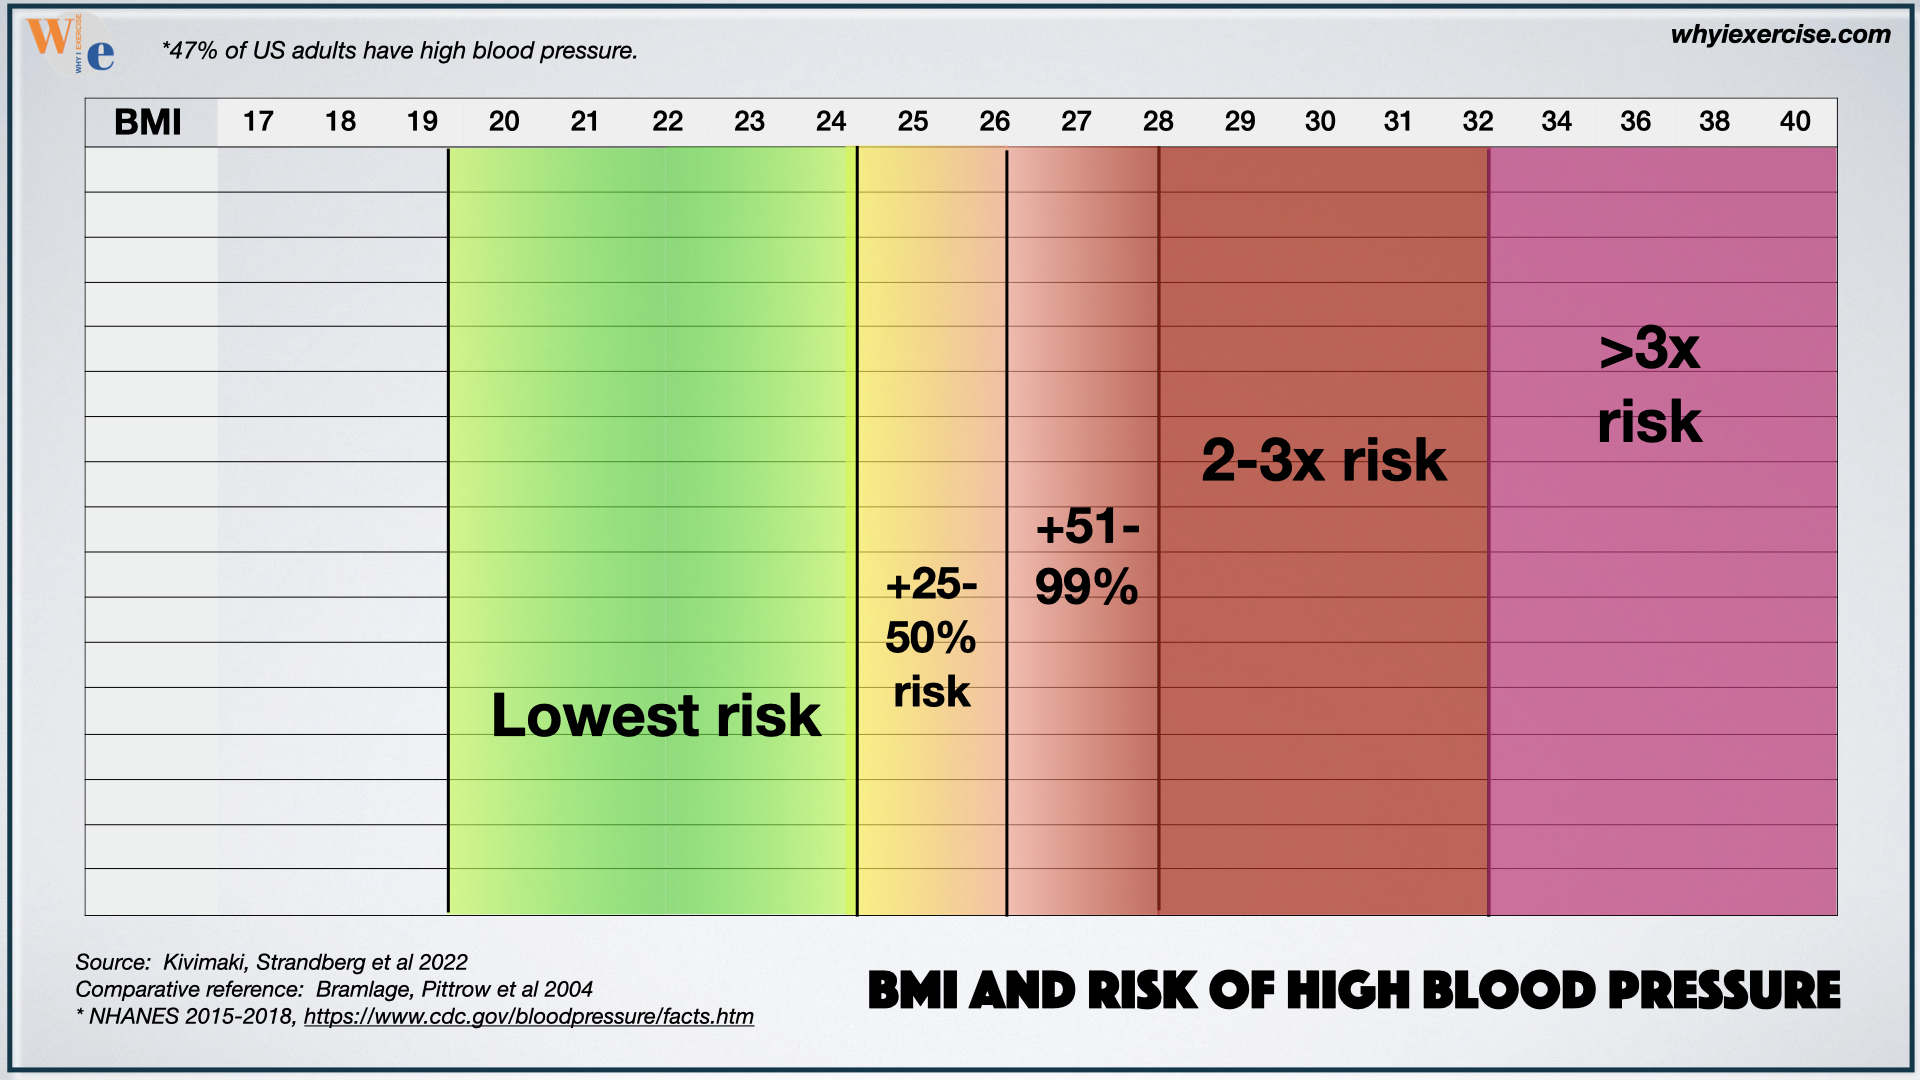 Body mass index (BMI) risk of high blood pressure